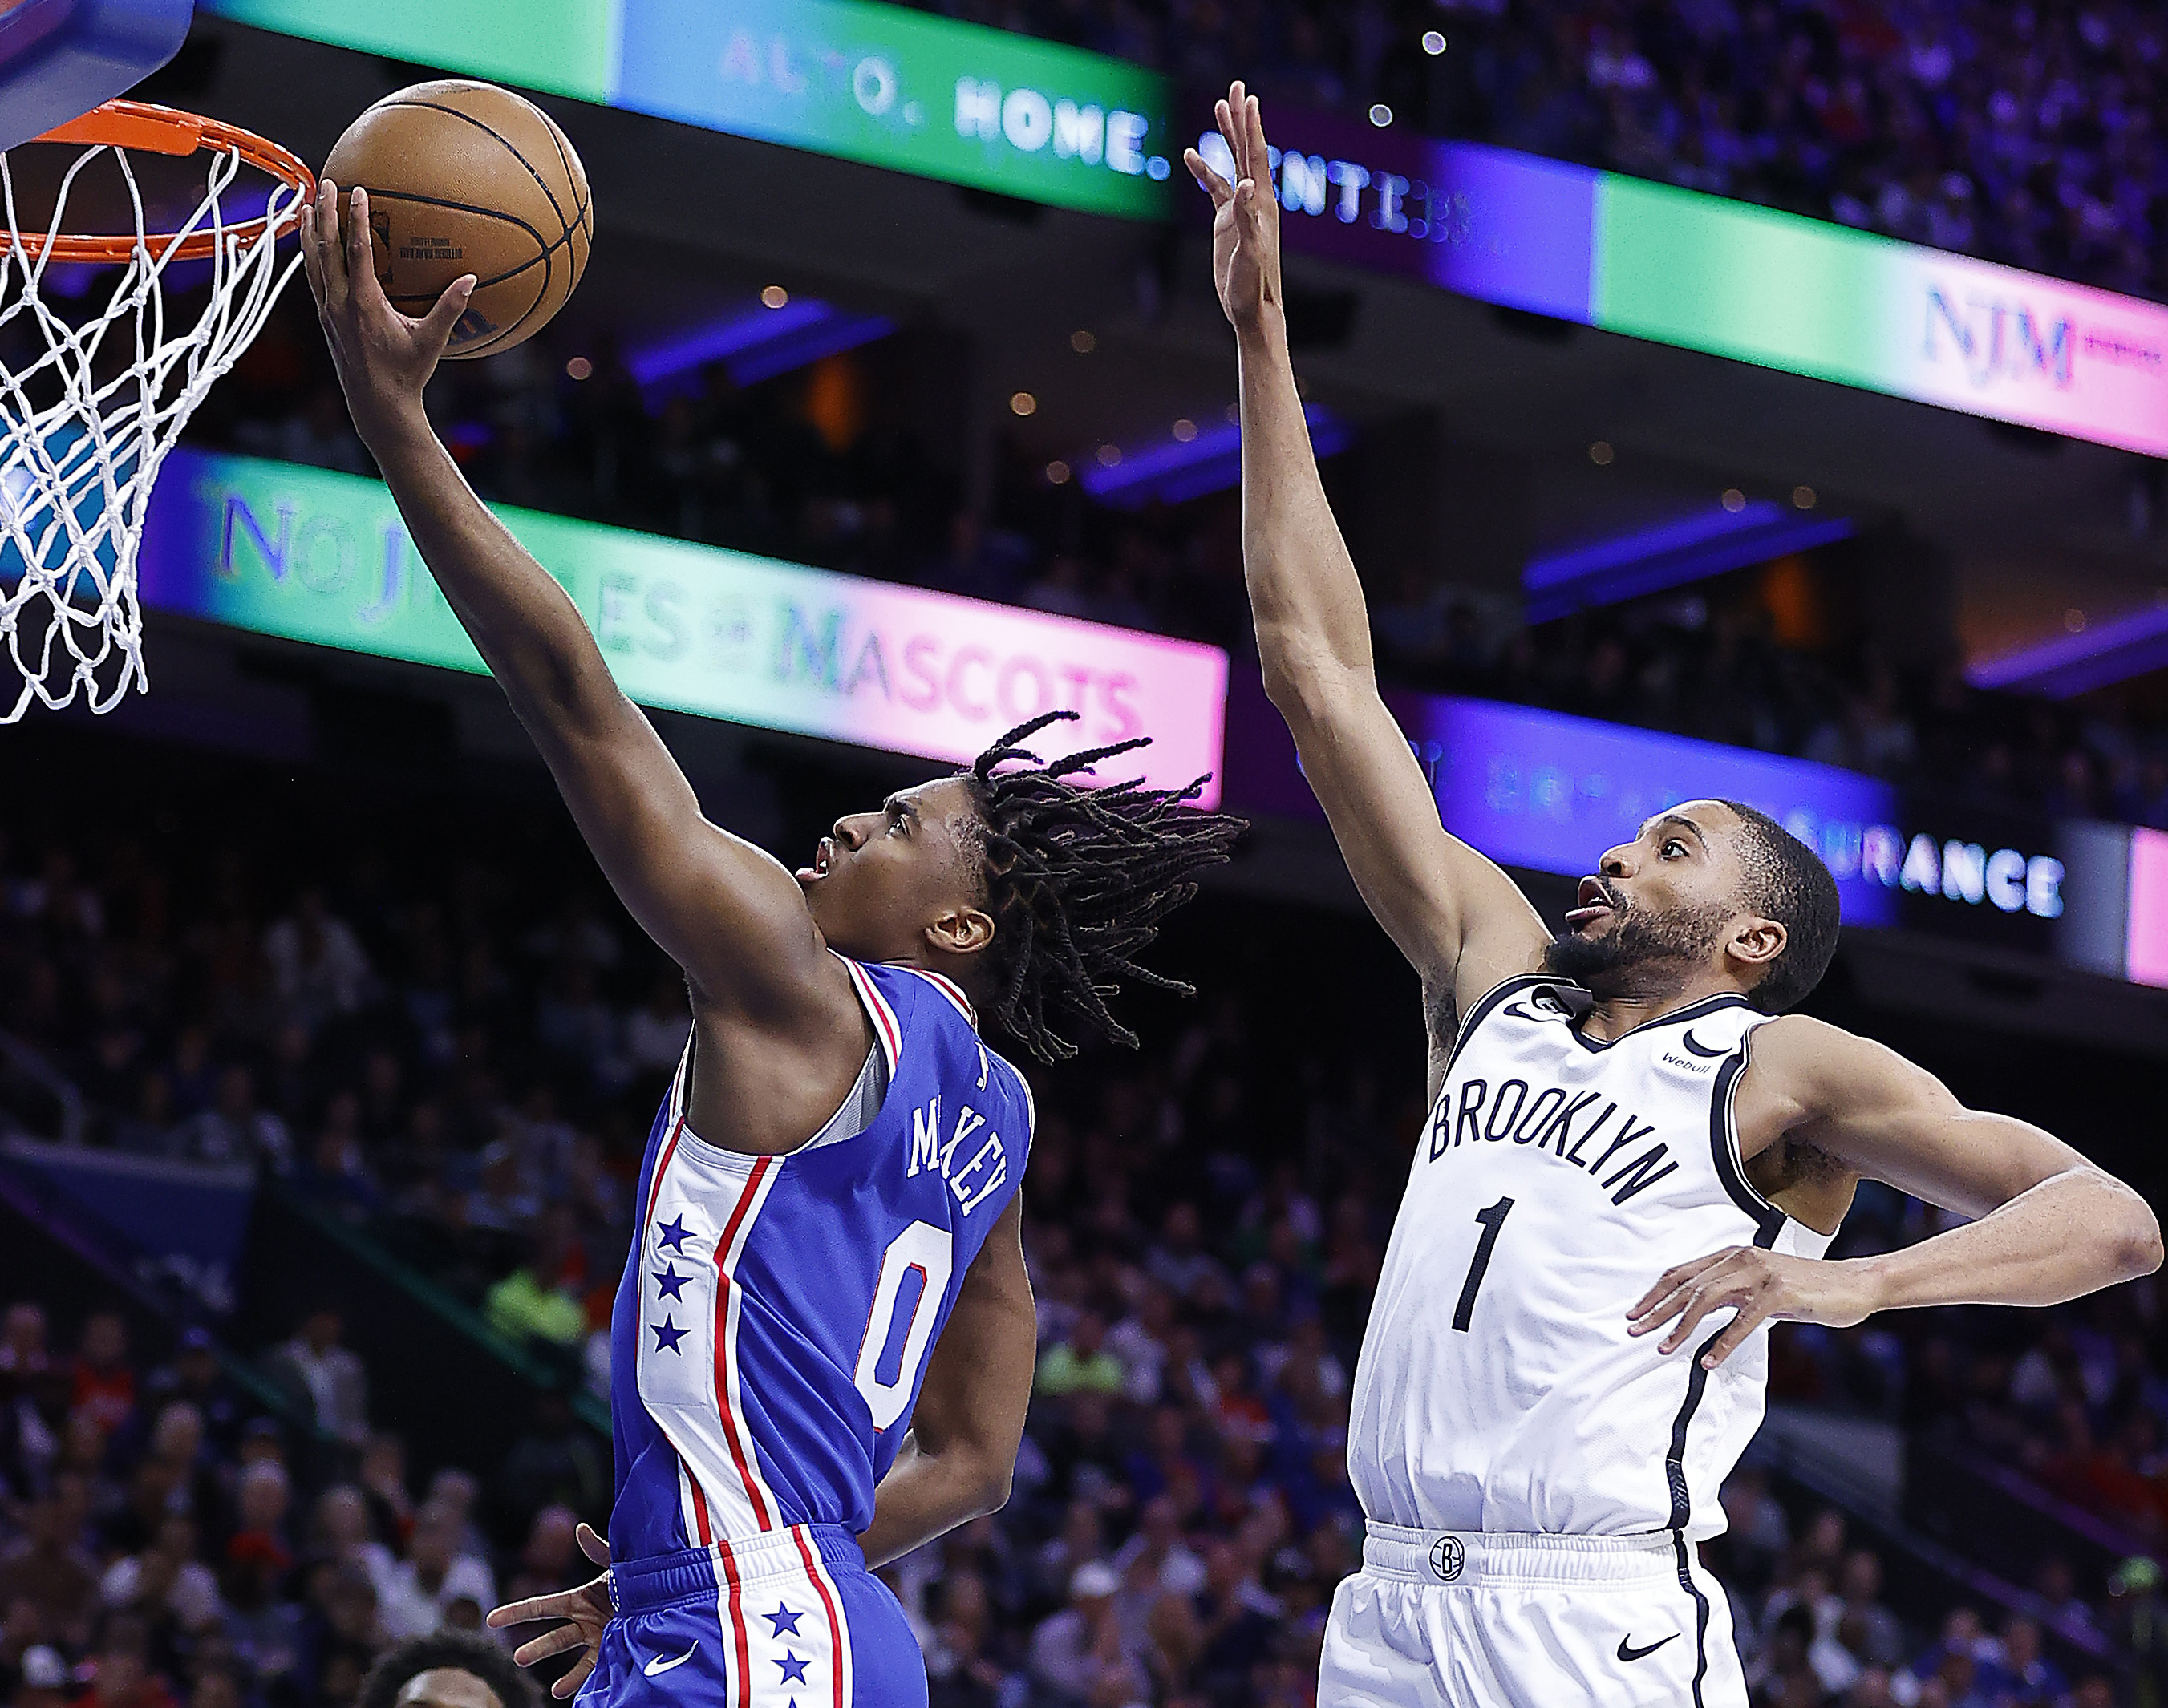 Philadelphia 76ers/New Jersey Nets NBA recap on ESPN